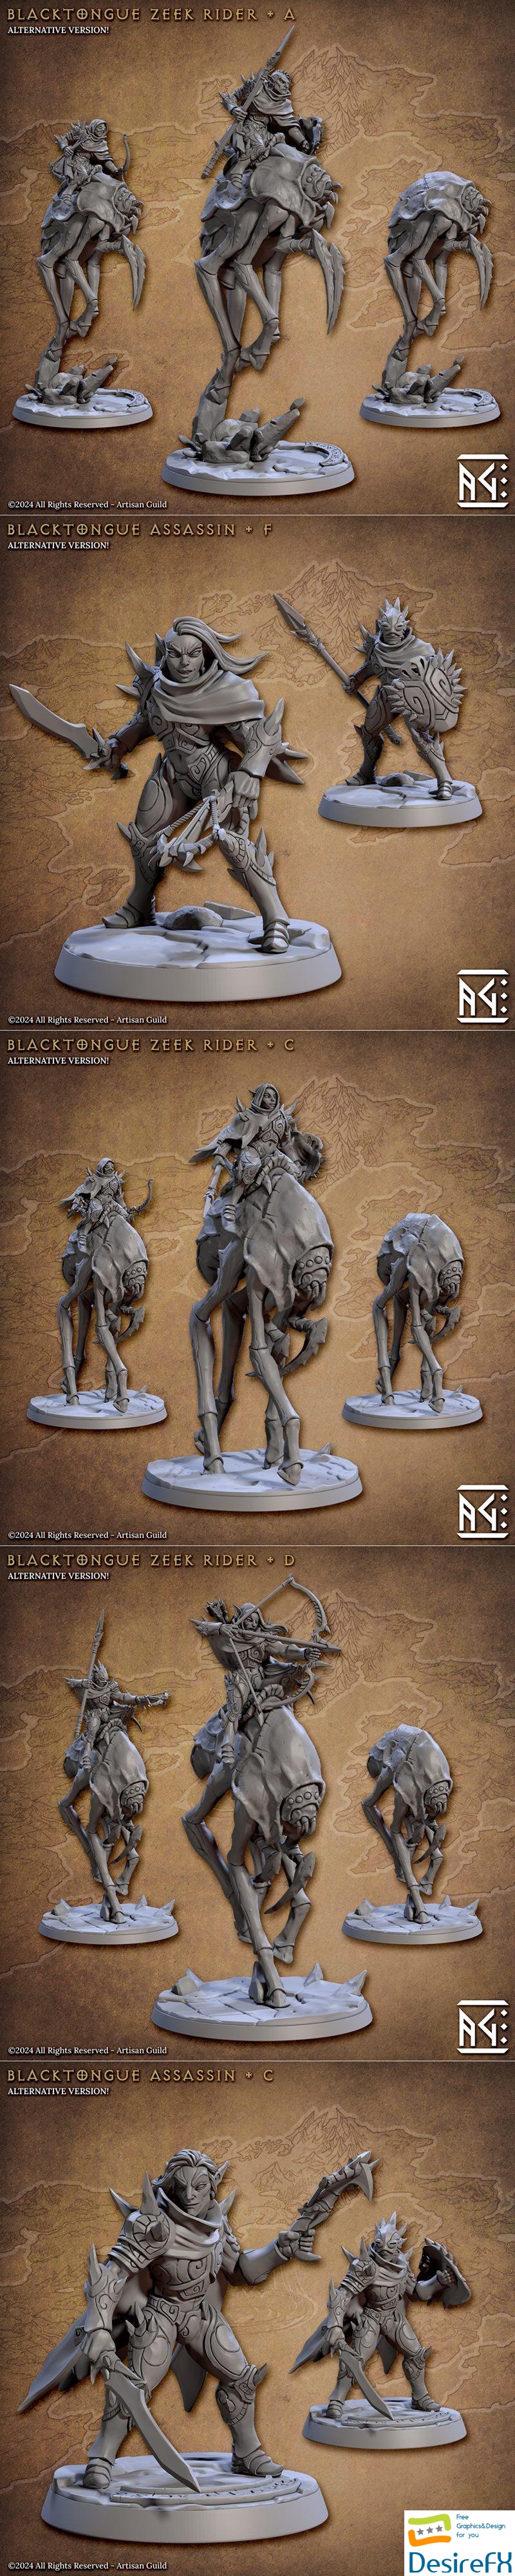 Artisan Guild - Blacktongue Assassins Complete Set - 57 3D Print